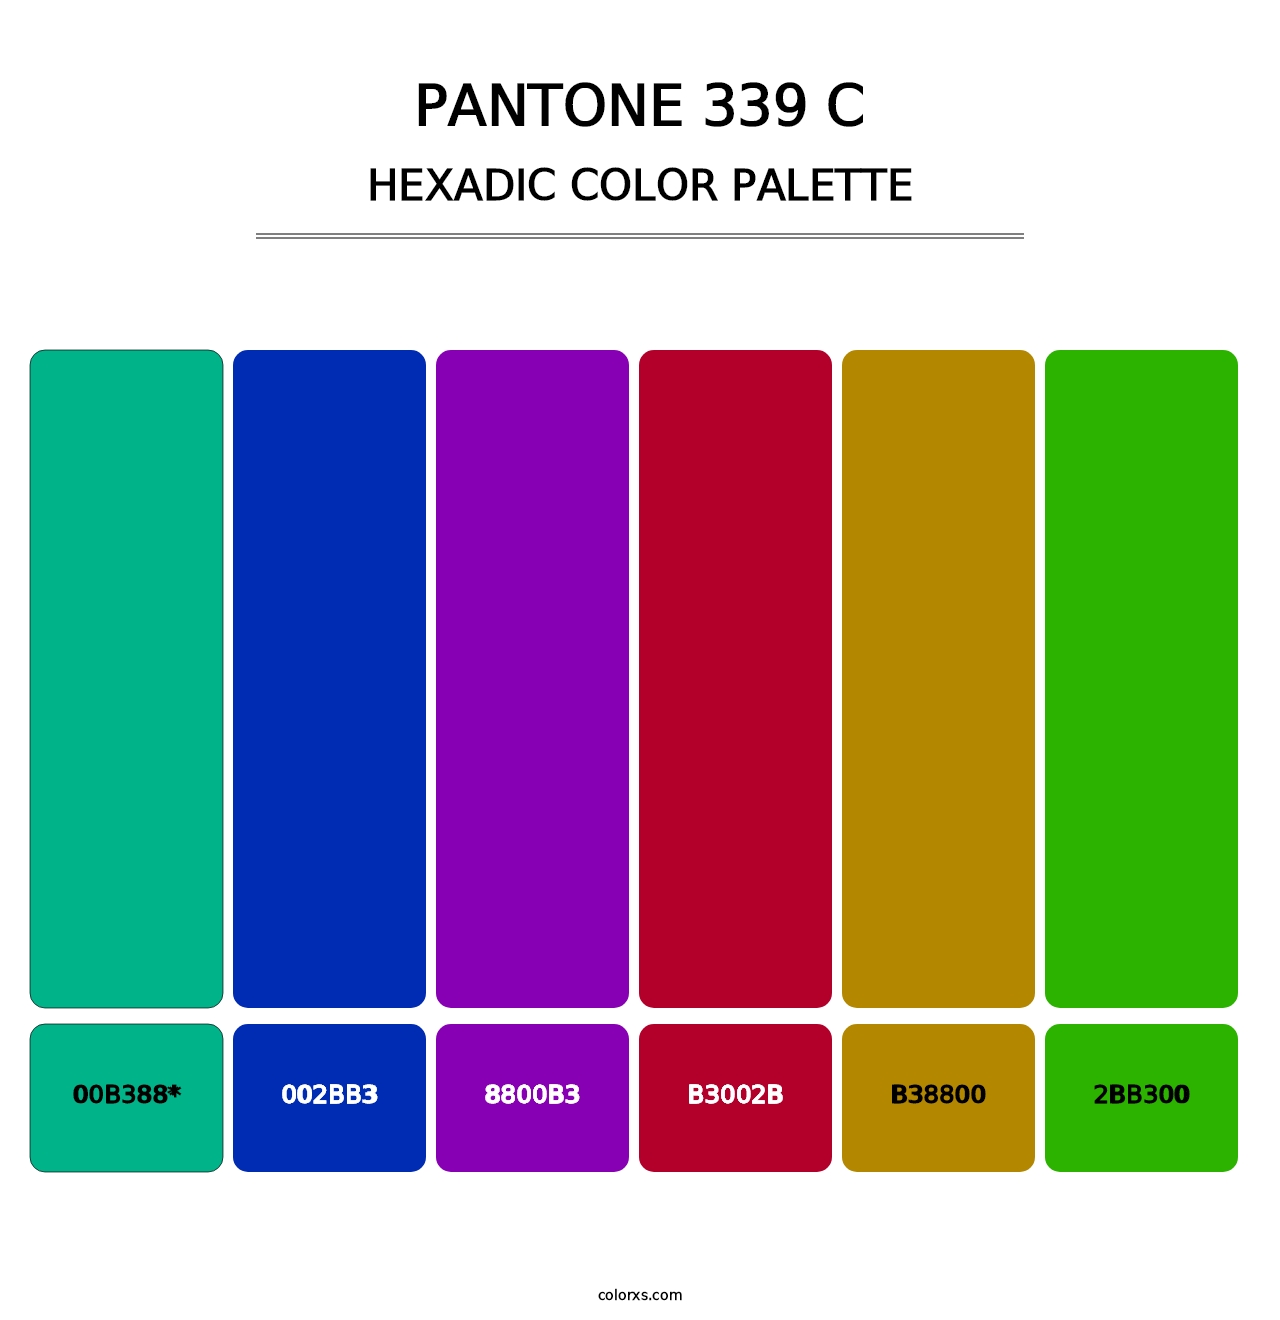 PANTONE 339 C - Hexadic Color Palette